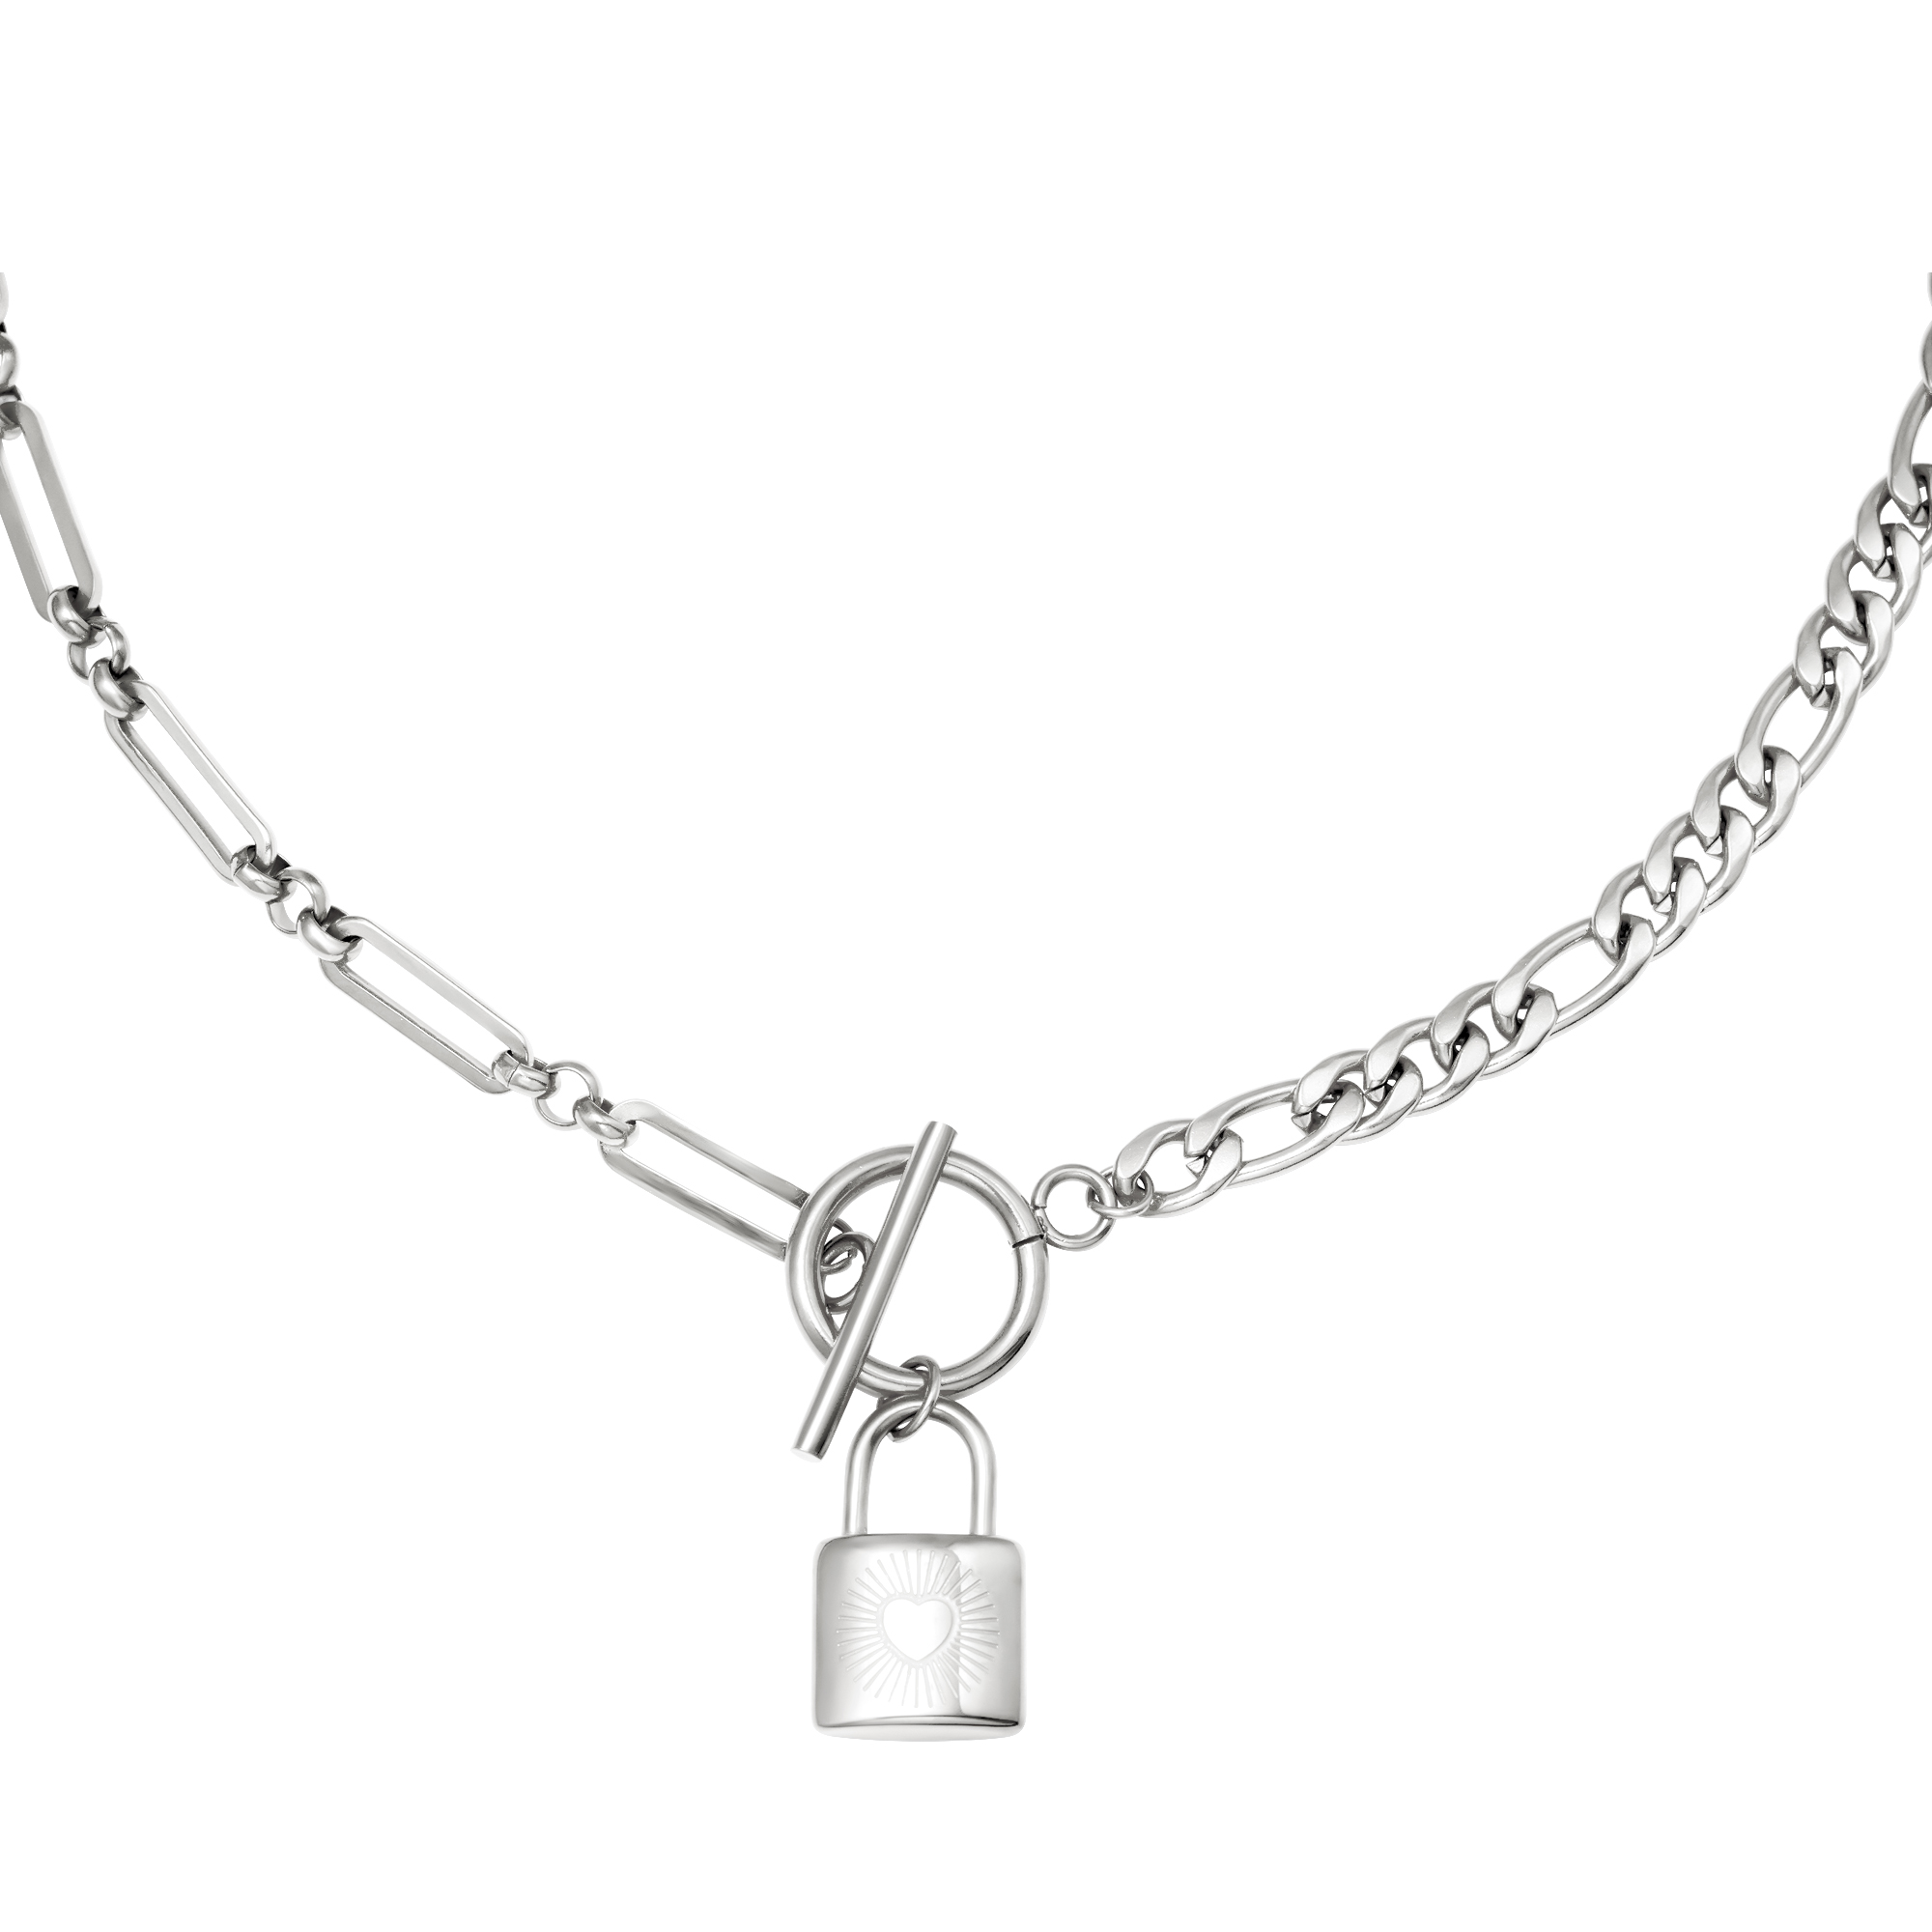 Silver / Necklace Chain & Lock 